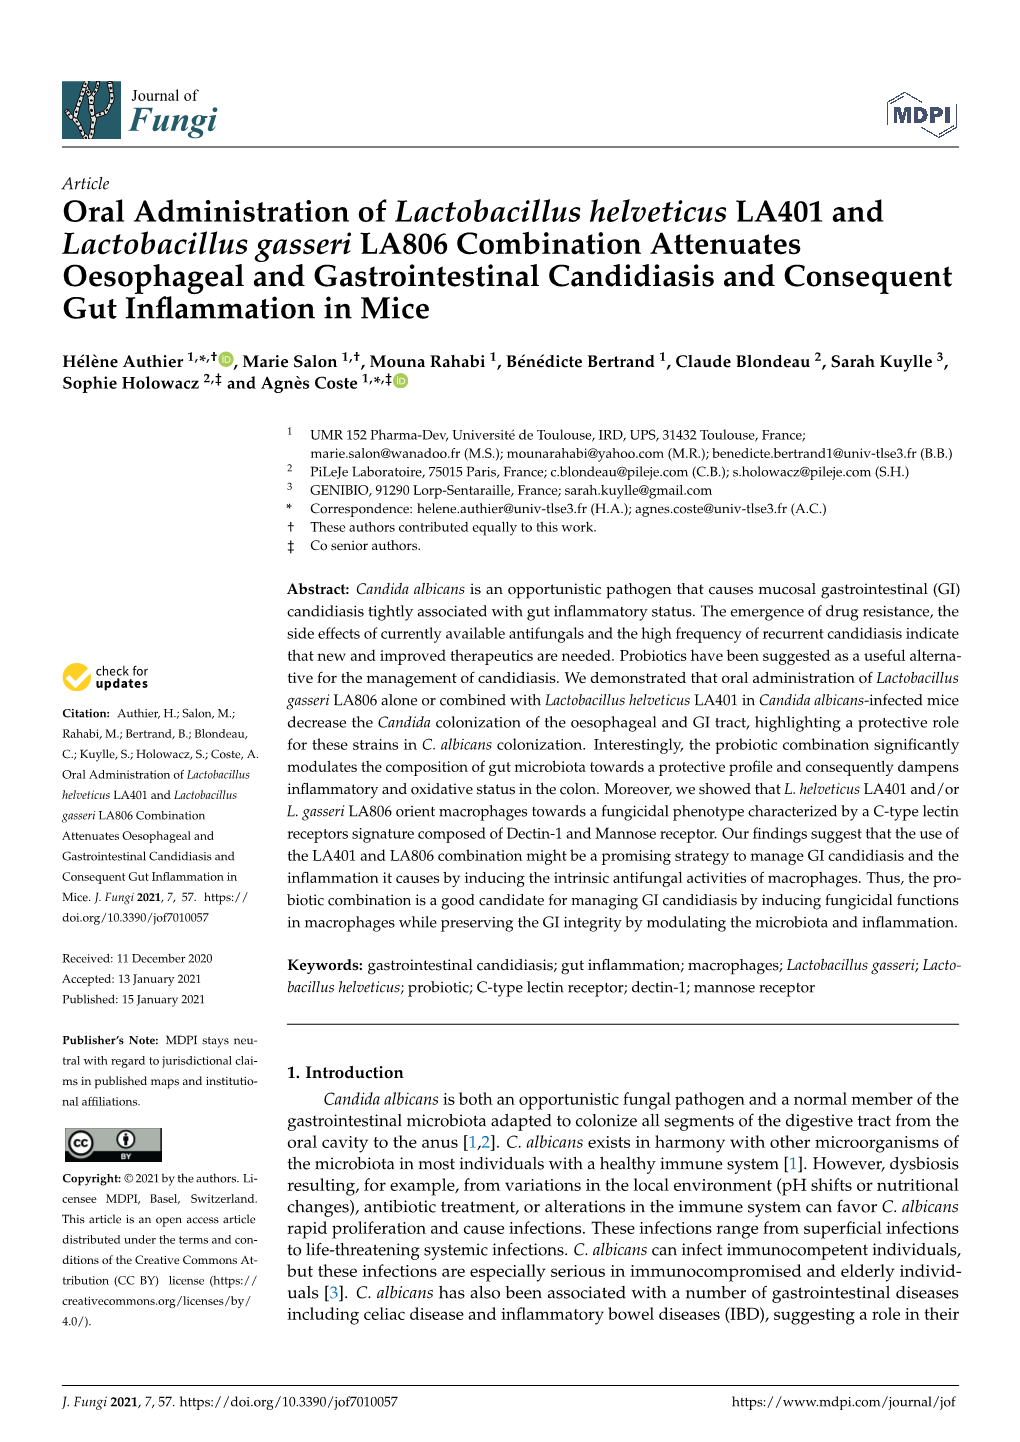 Oral Administration of Lactobacillus Helveticus LA401 and Lactobacillus